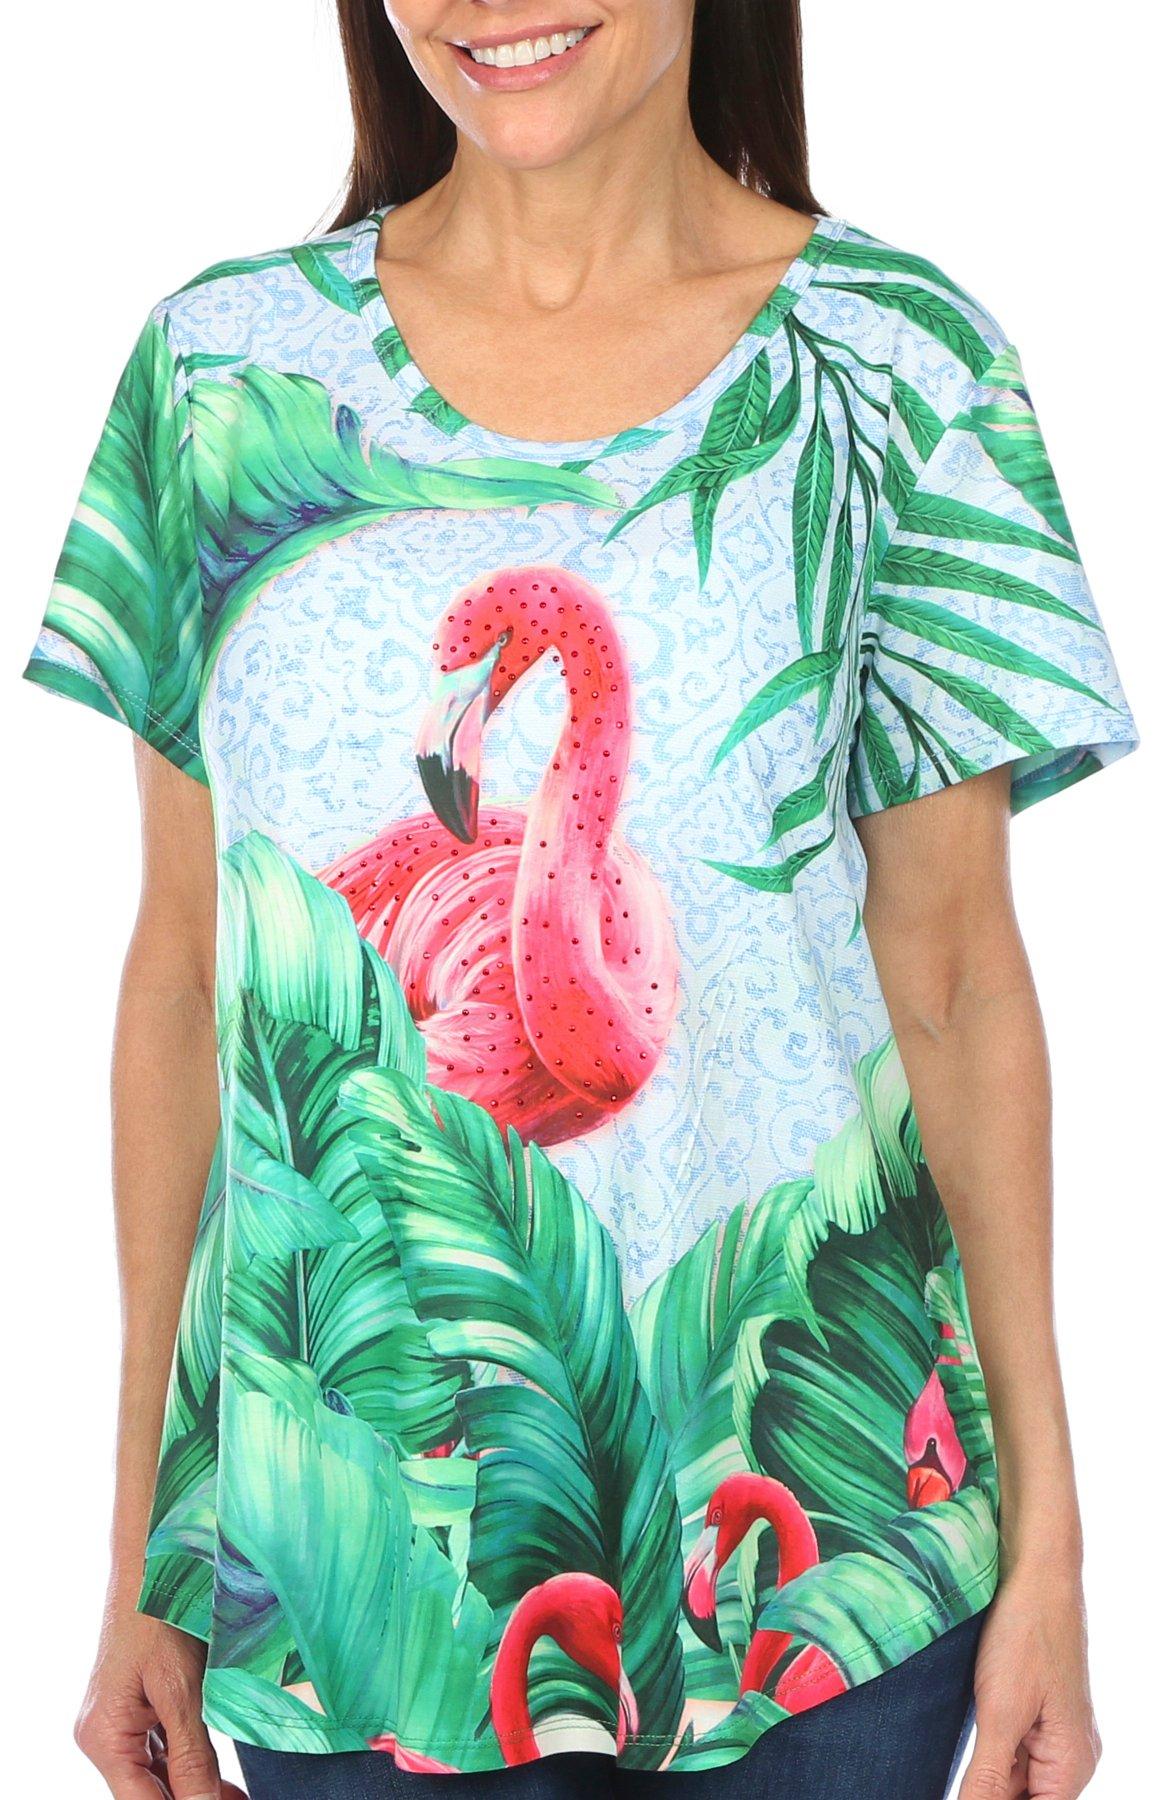 Coral Bay Womens Flamingo Print Short Sleeve Top